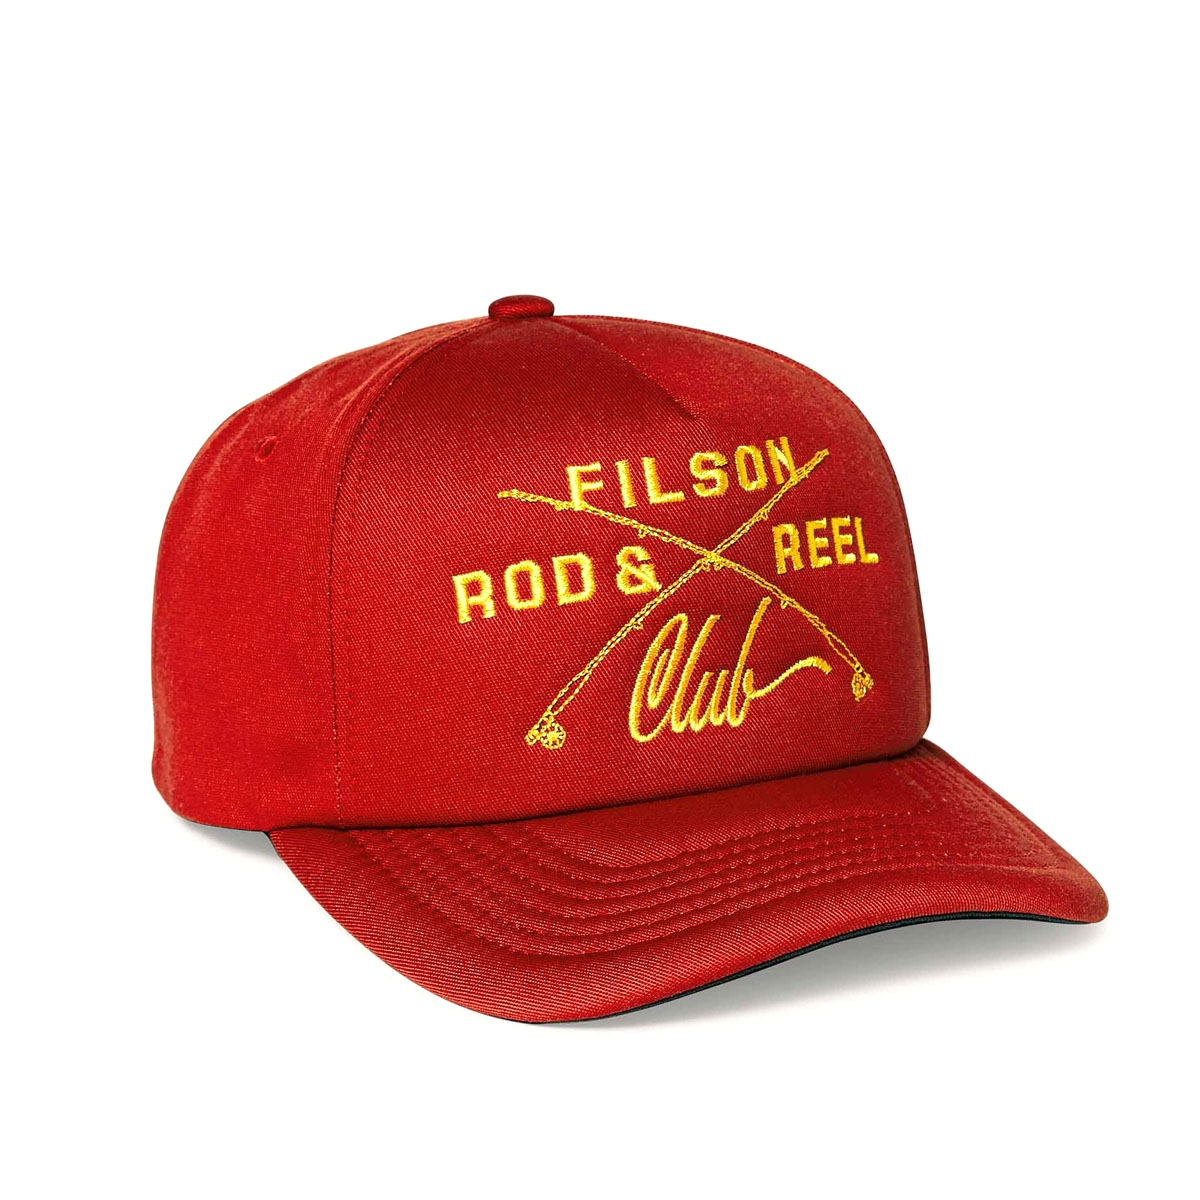 Filson Harvester Cap Rust/Rod And Reel Club